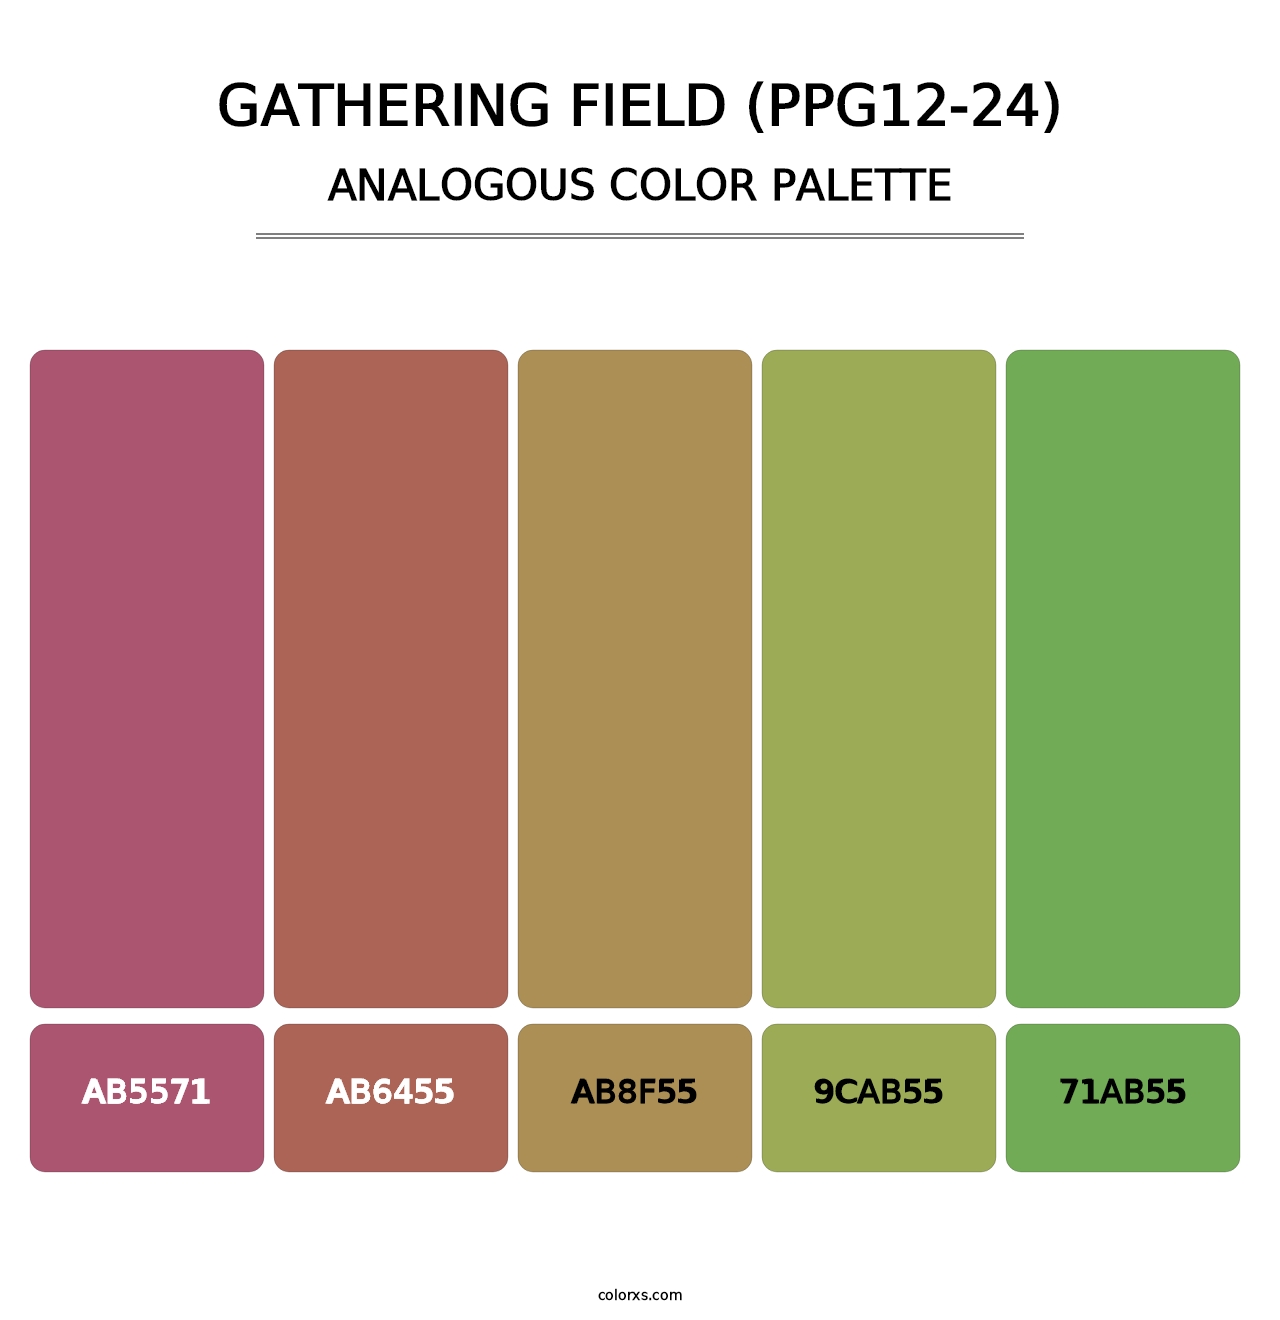 Gathering Field (PPG12-24) - Analogous Color Palette